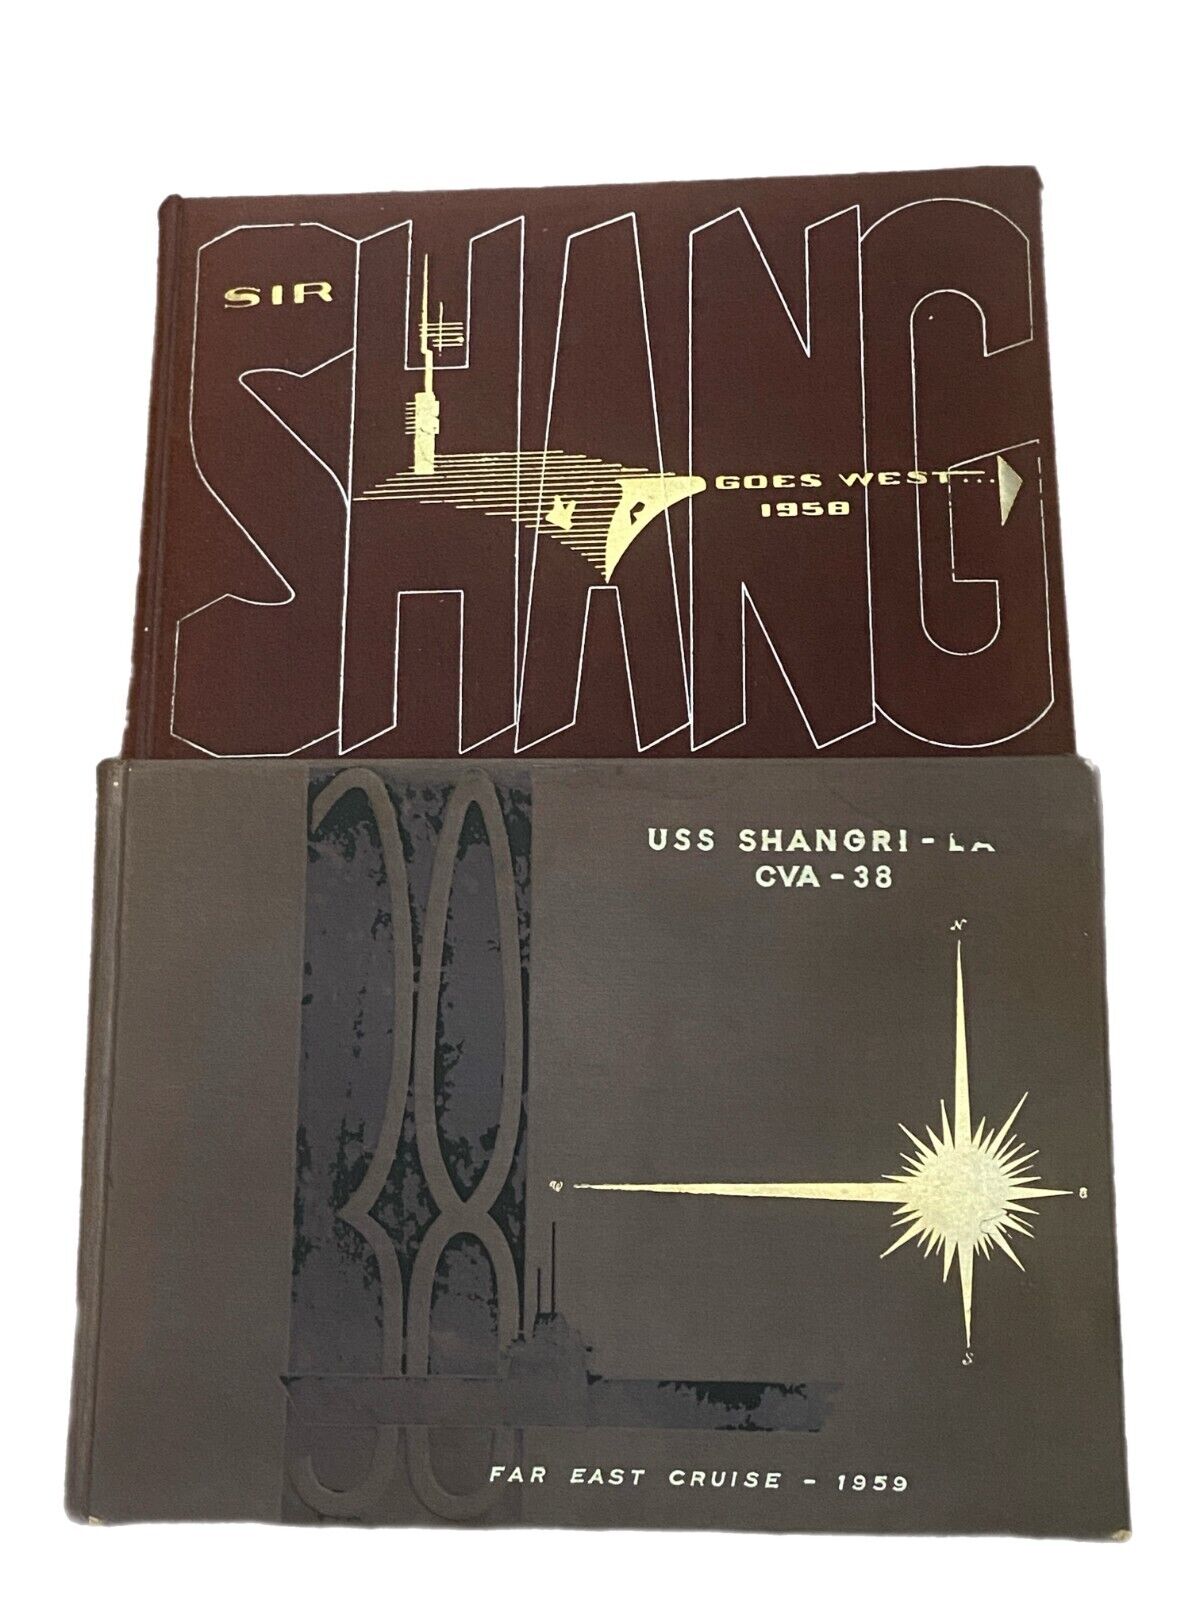 USS Shangri-La CVA-38 US Navy Career 1958-59 Far East Tour Cruise Books